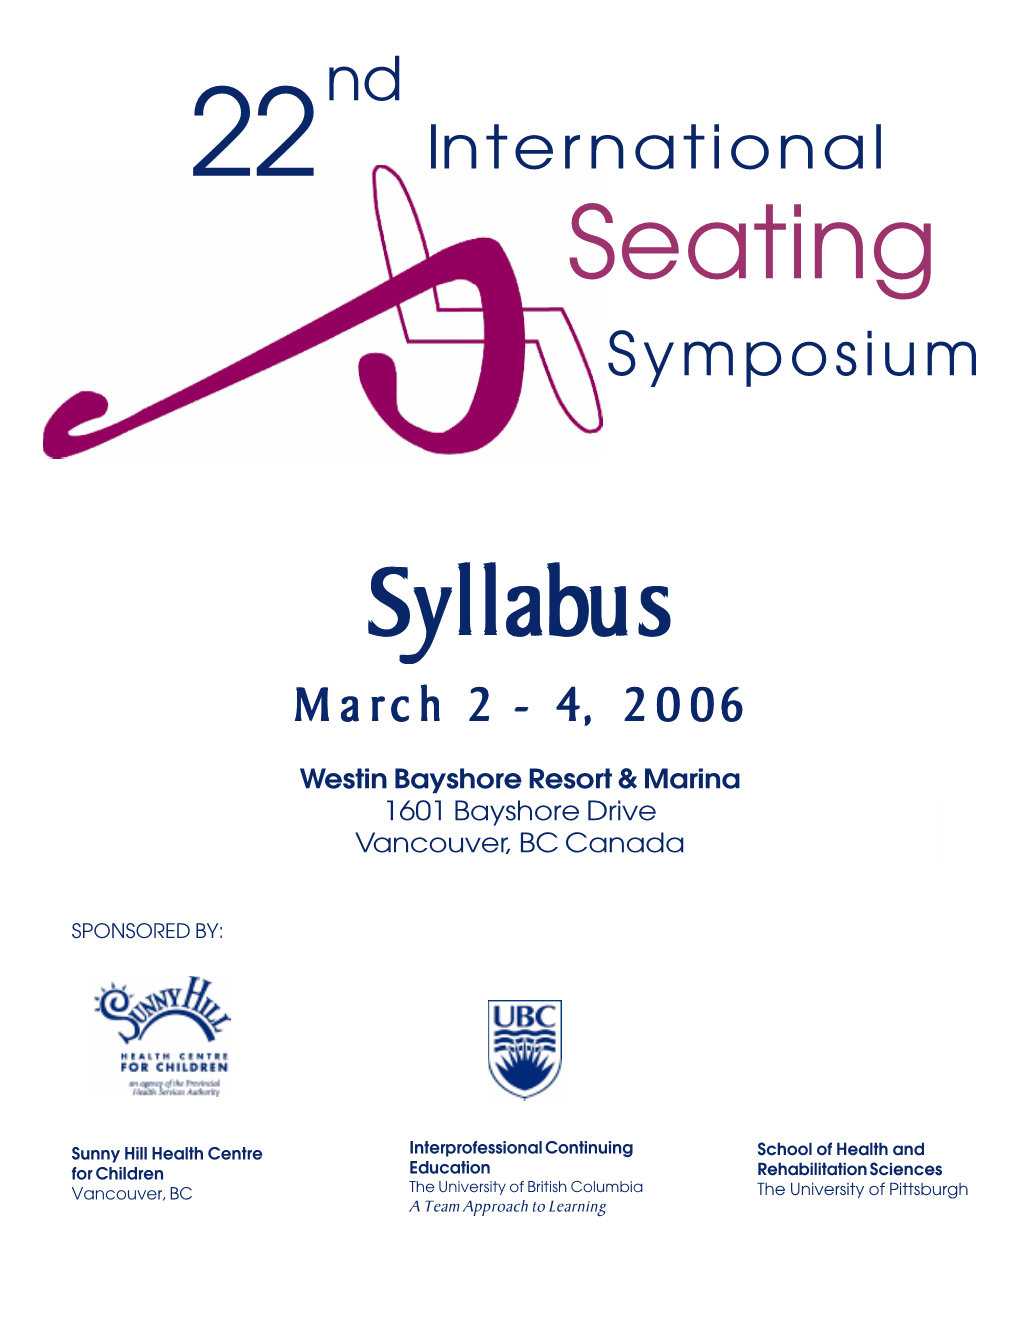 Syllabusus March 2 - 4, 2006